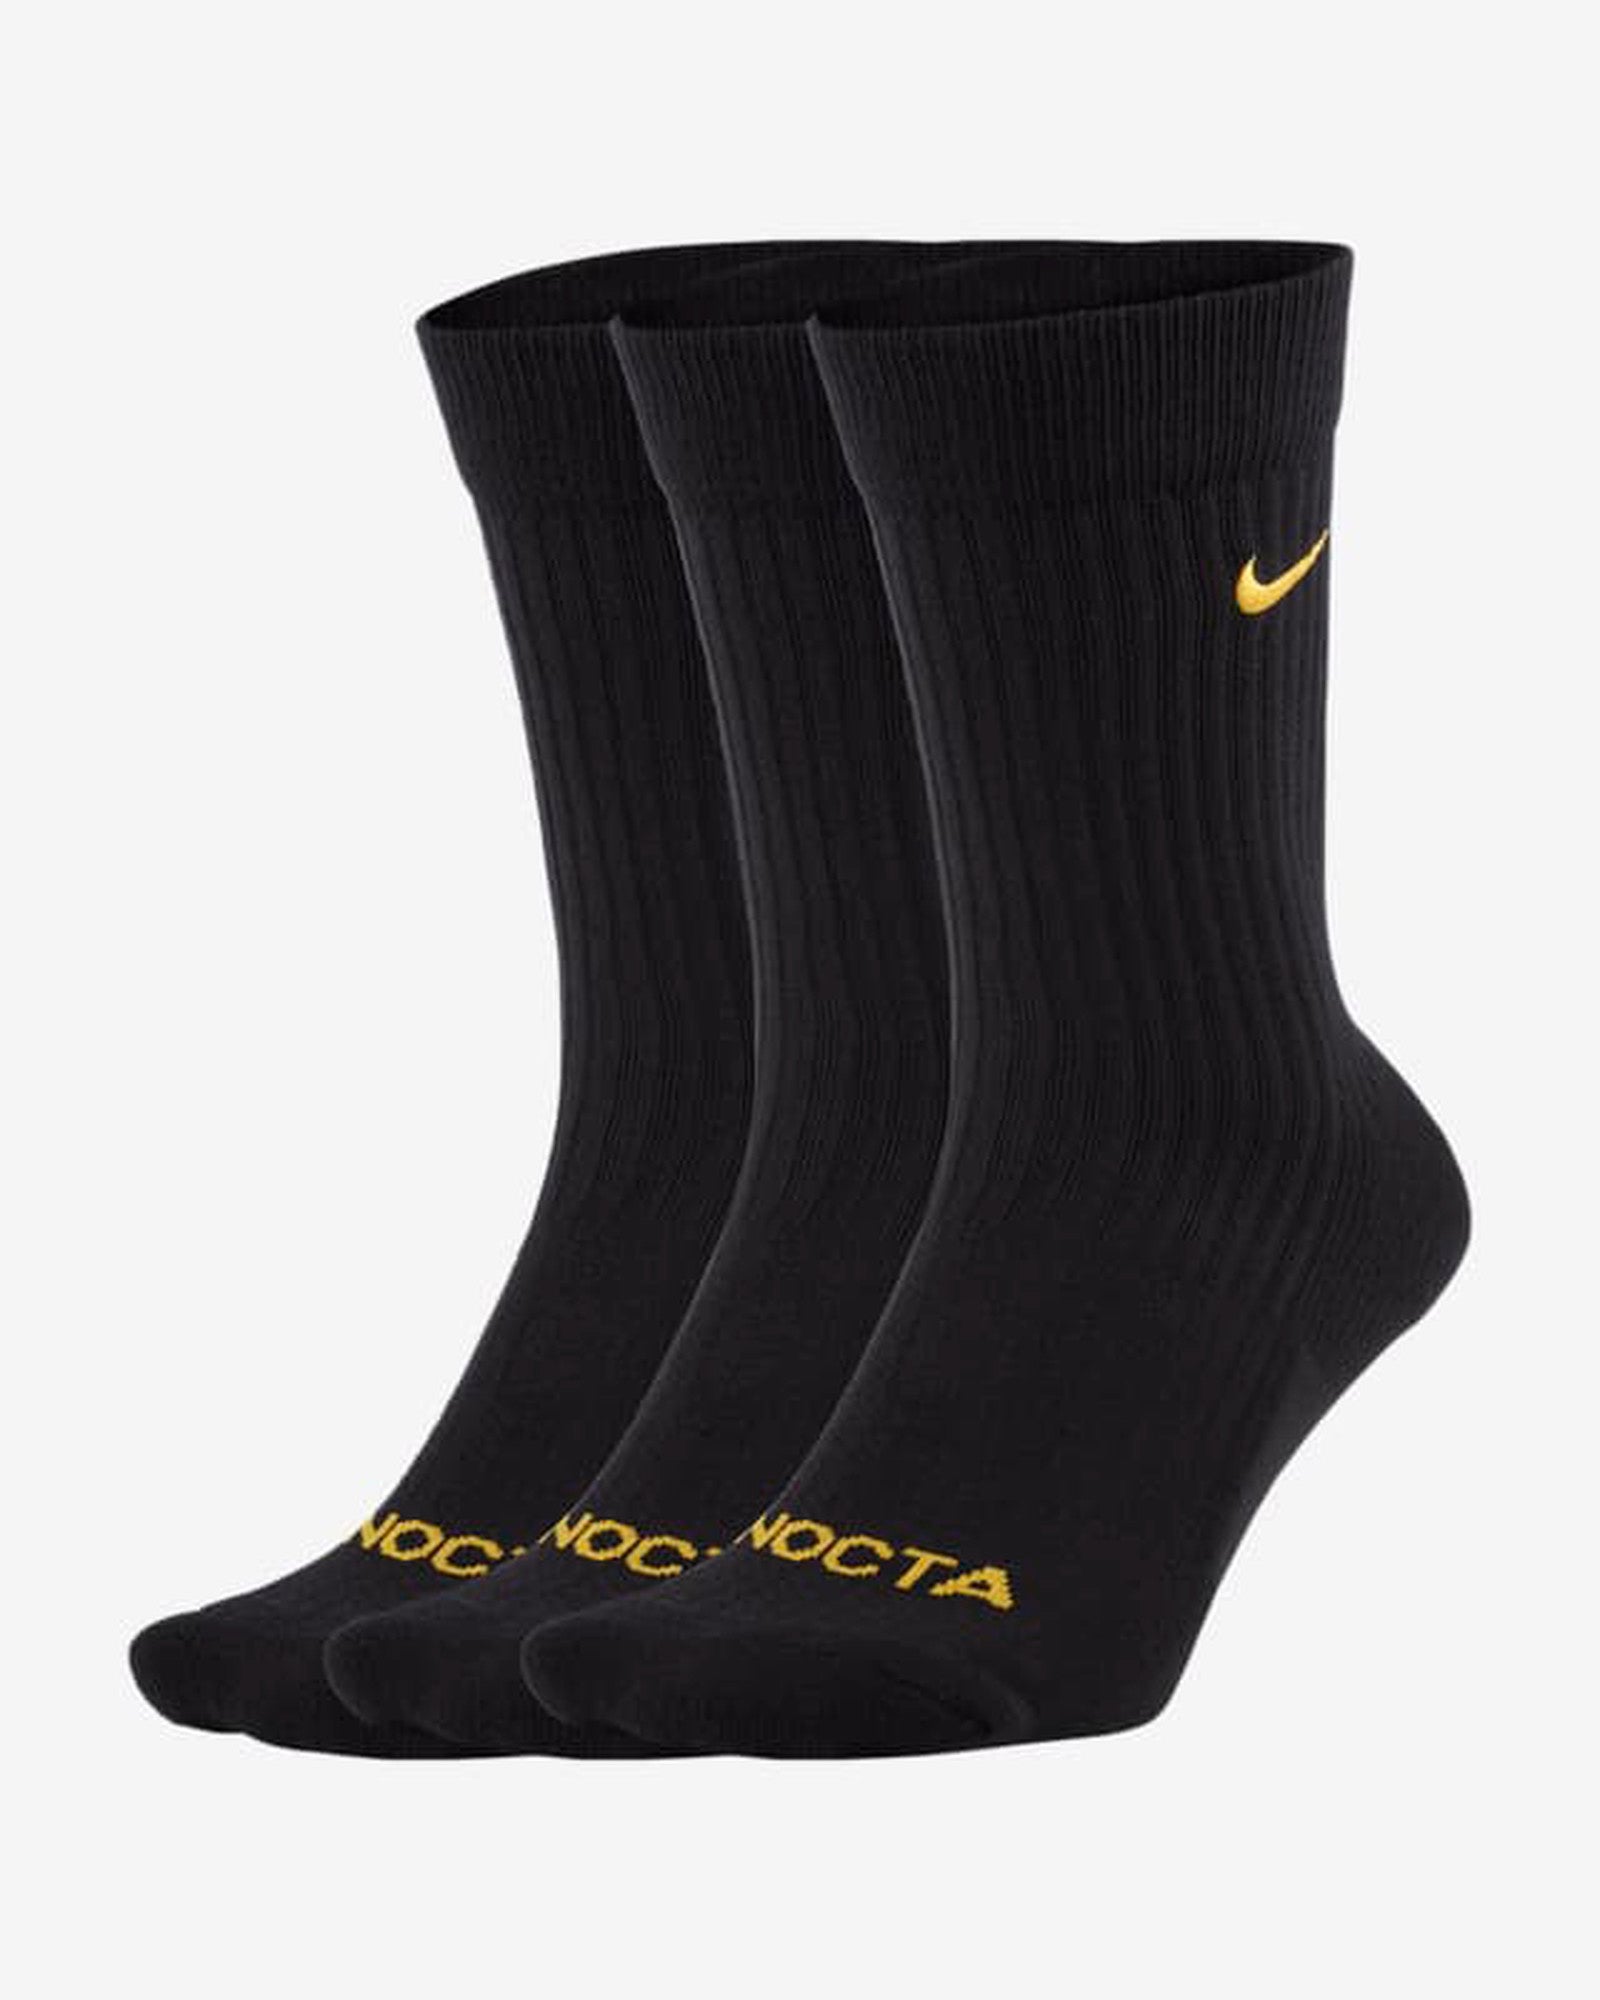 Drake x Nike "NOCTA" Black Socks